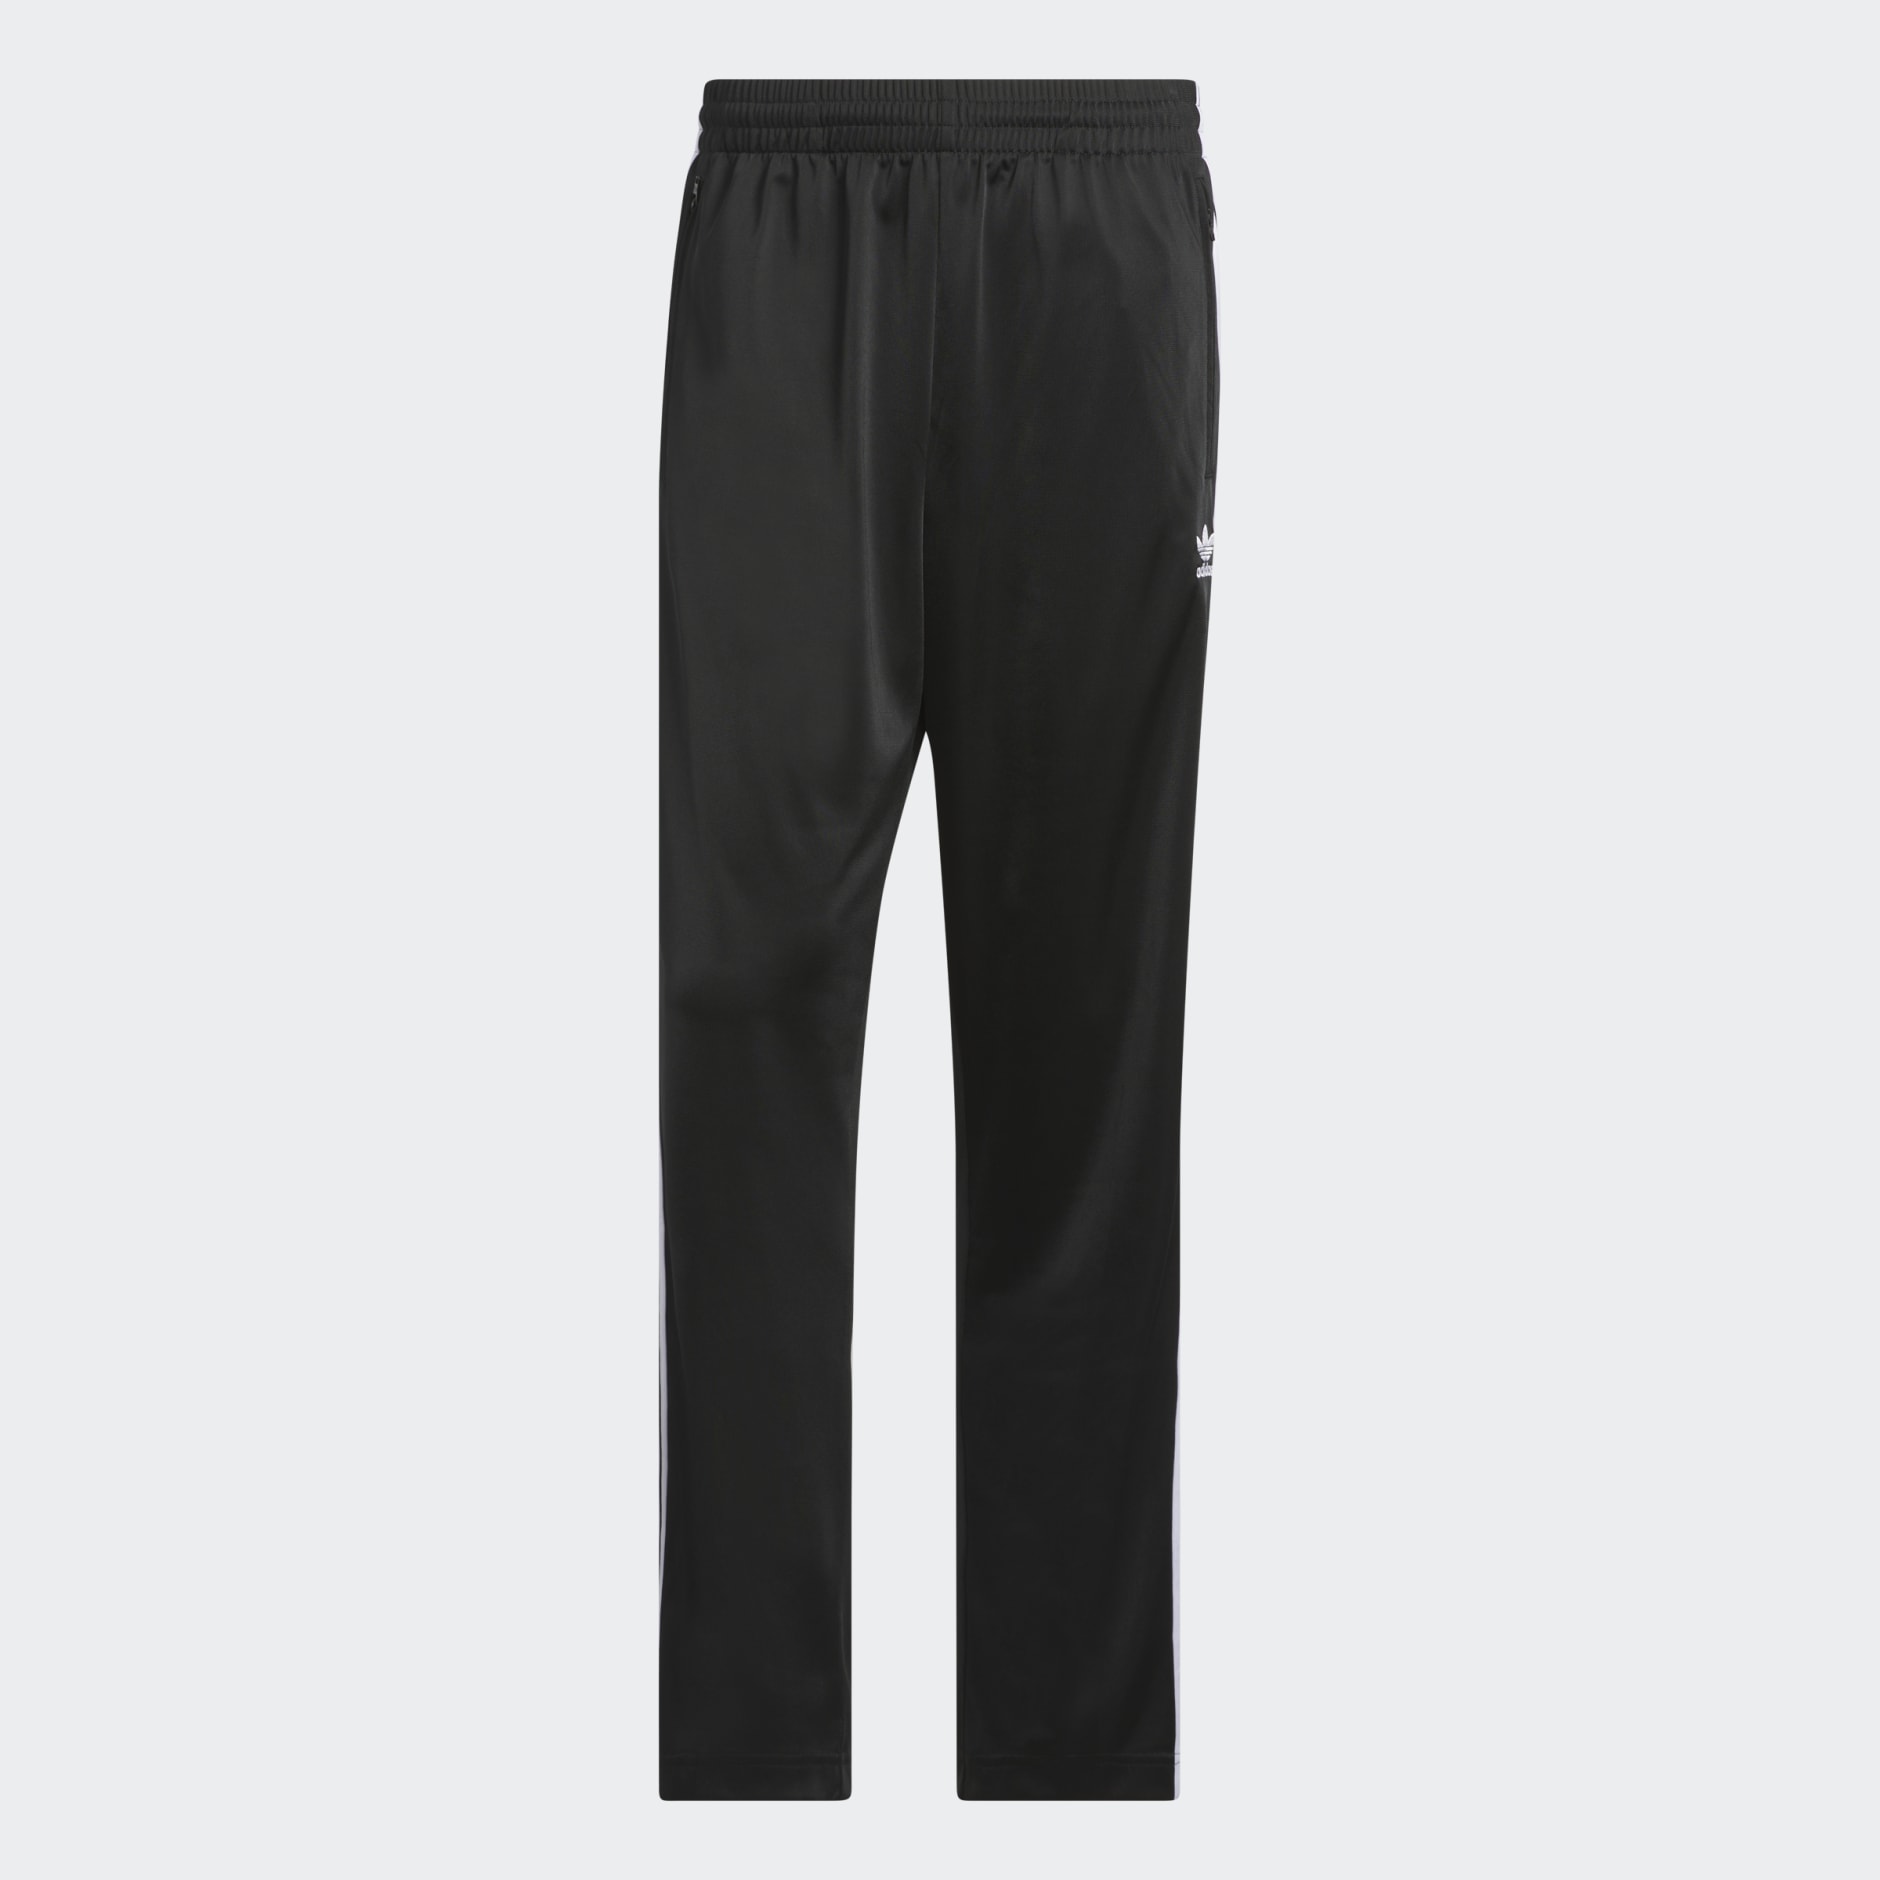 Men's Clothing - Adicolor Classics Firebird Track Pants - Black ...